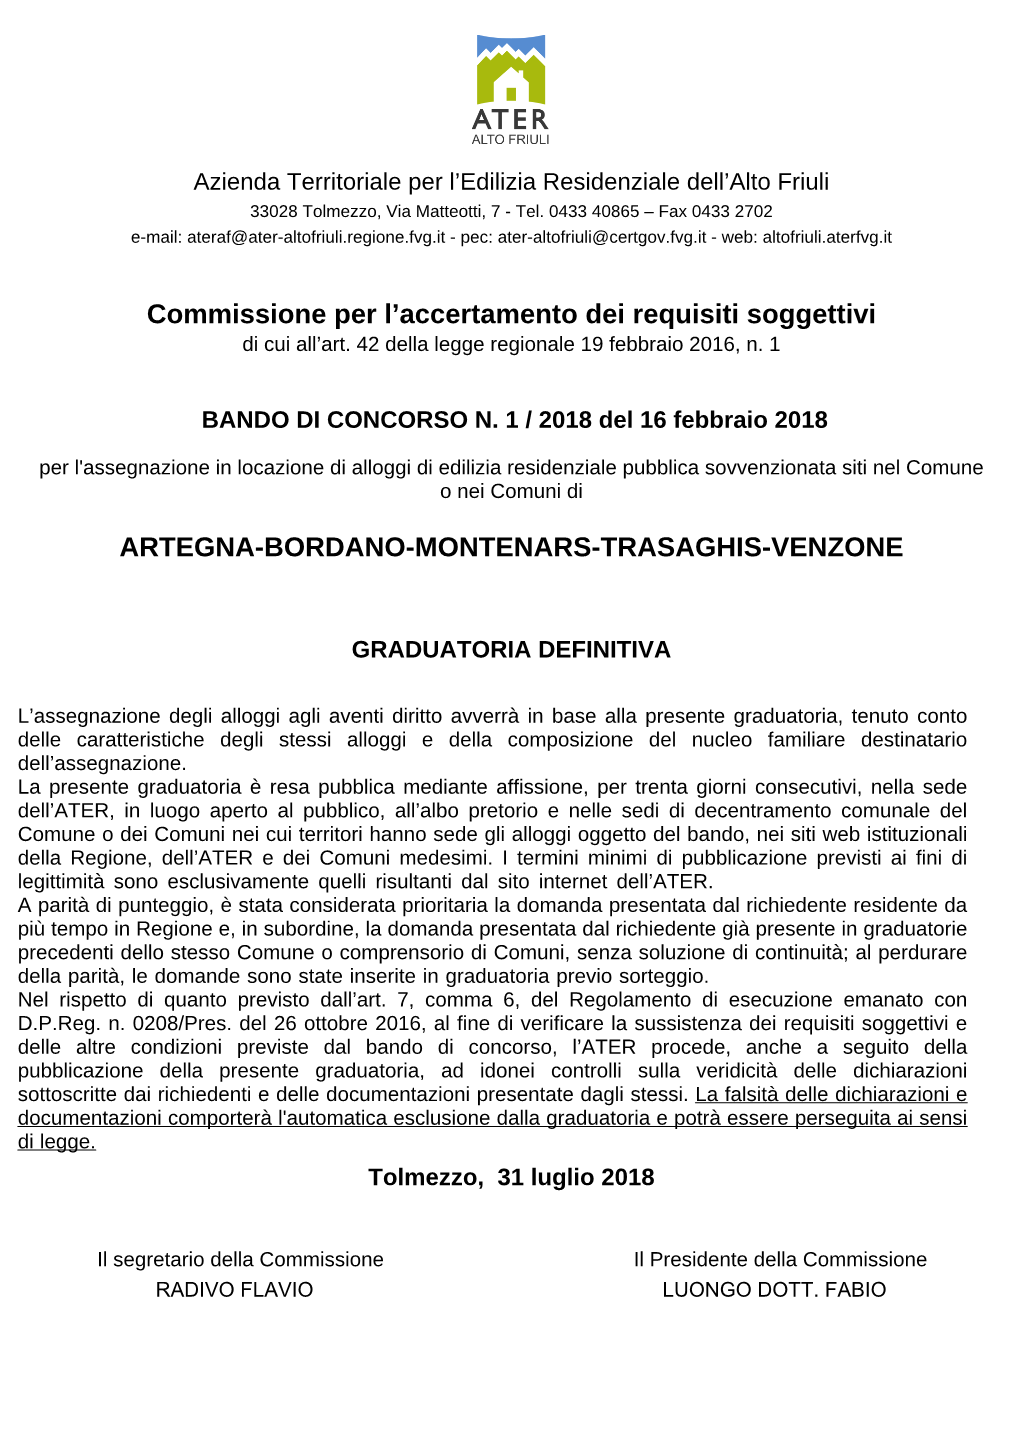 Artegna-Bordano-Montenars-Trasaghis-Venzone